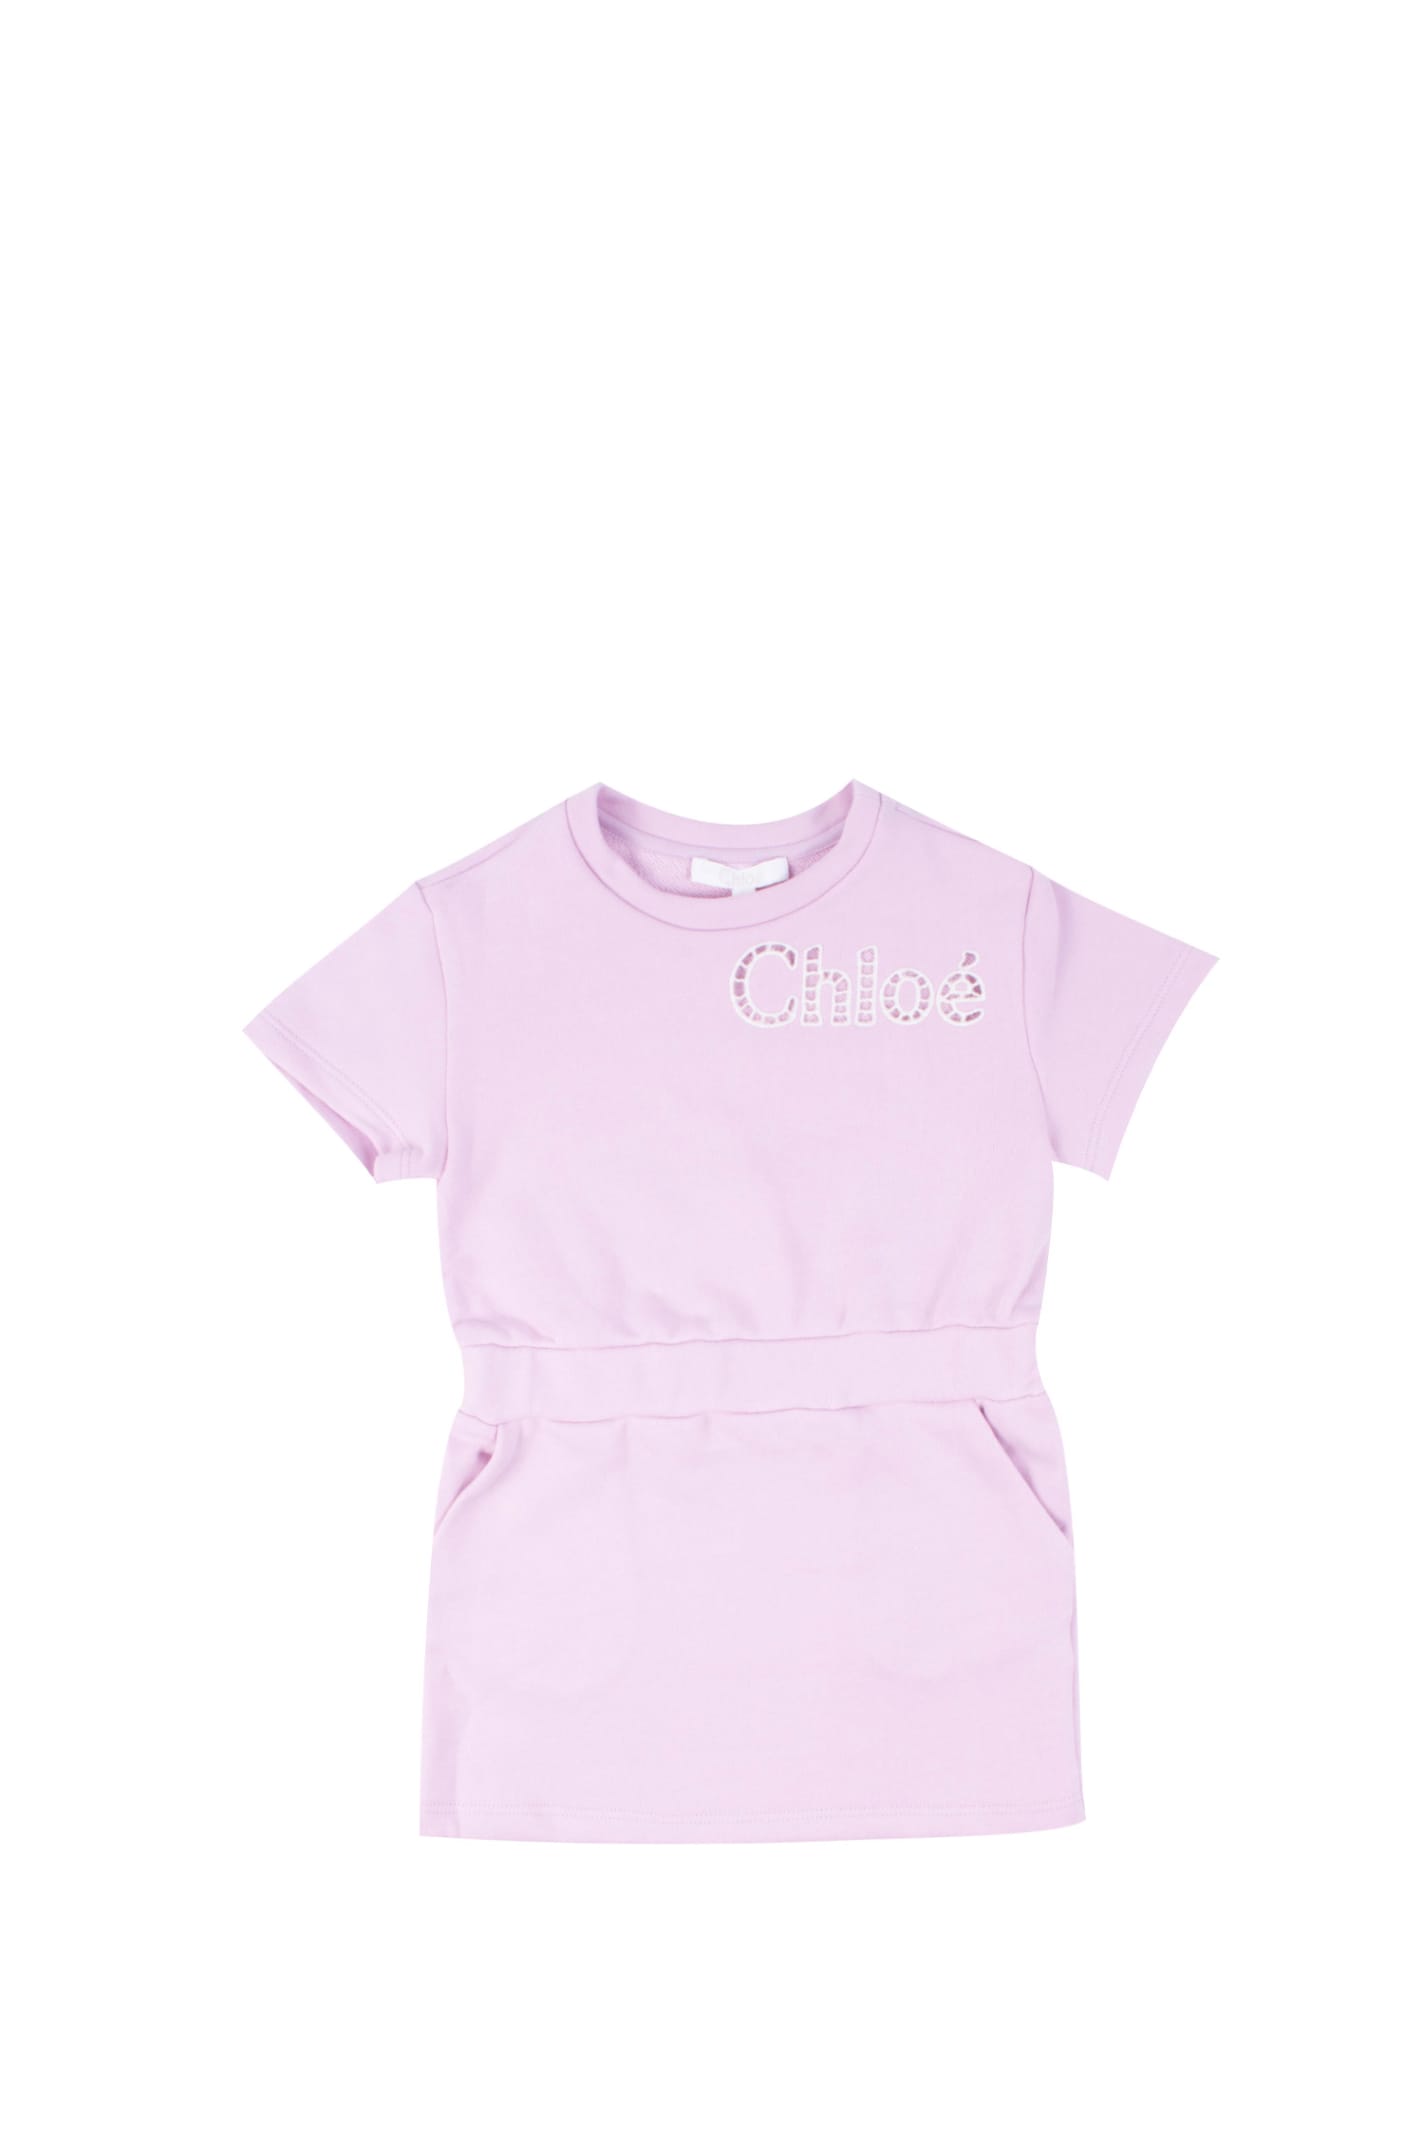 Chloé Cotton Dress